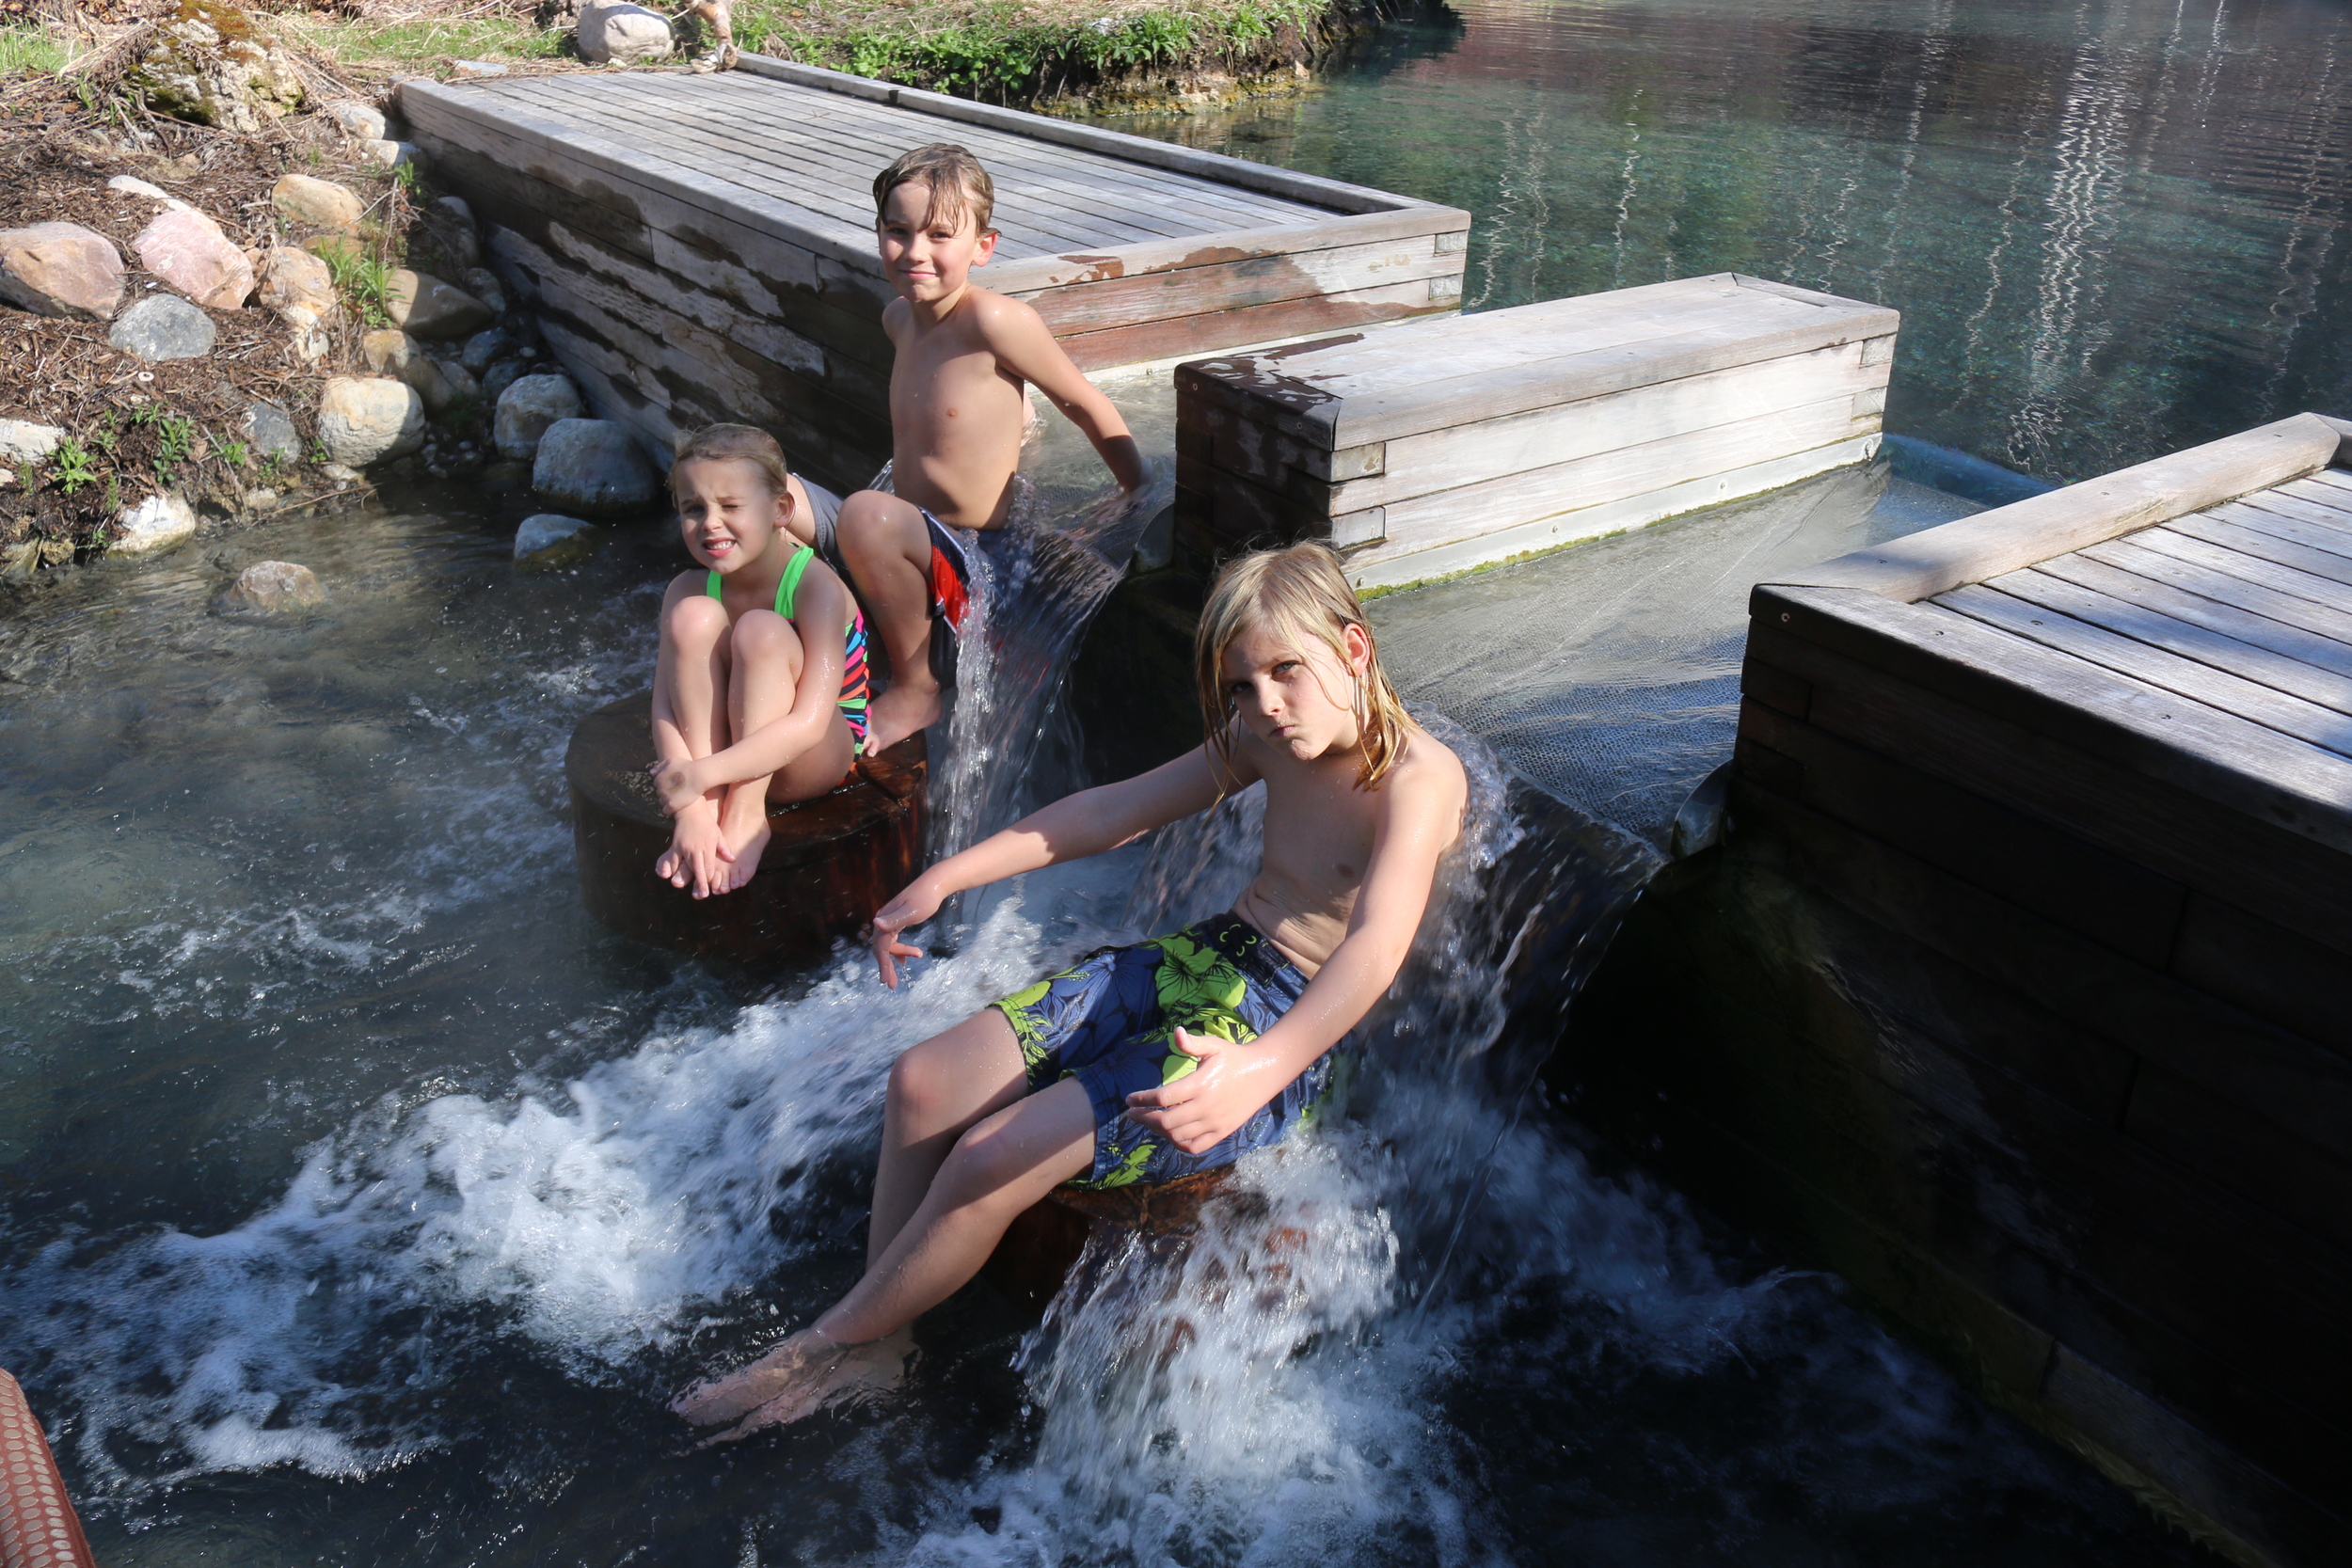 Liard River Hot Springs